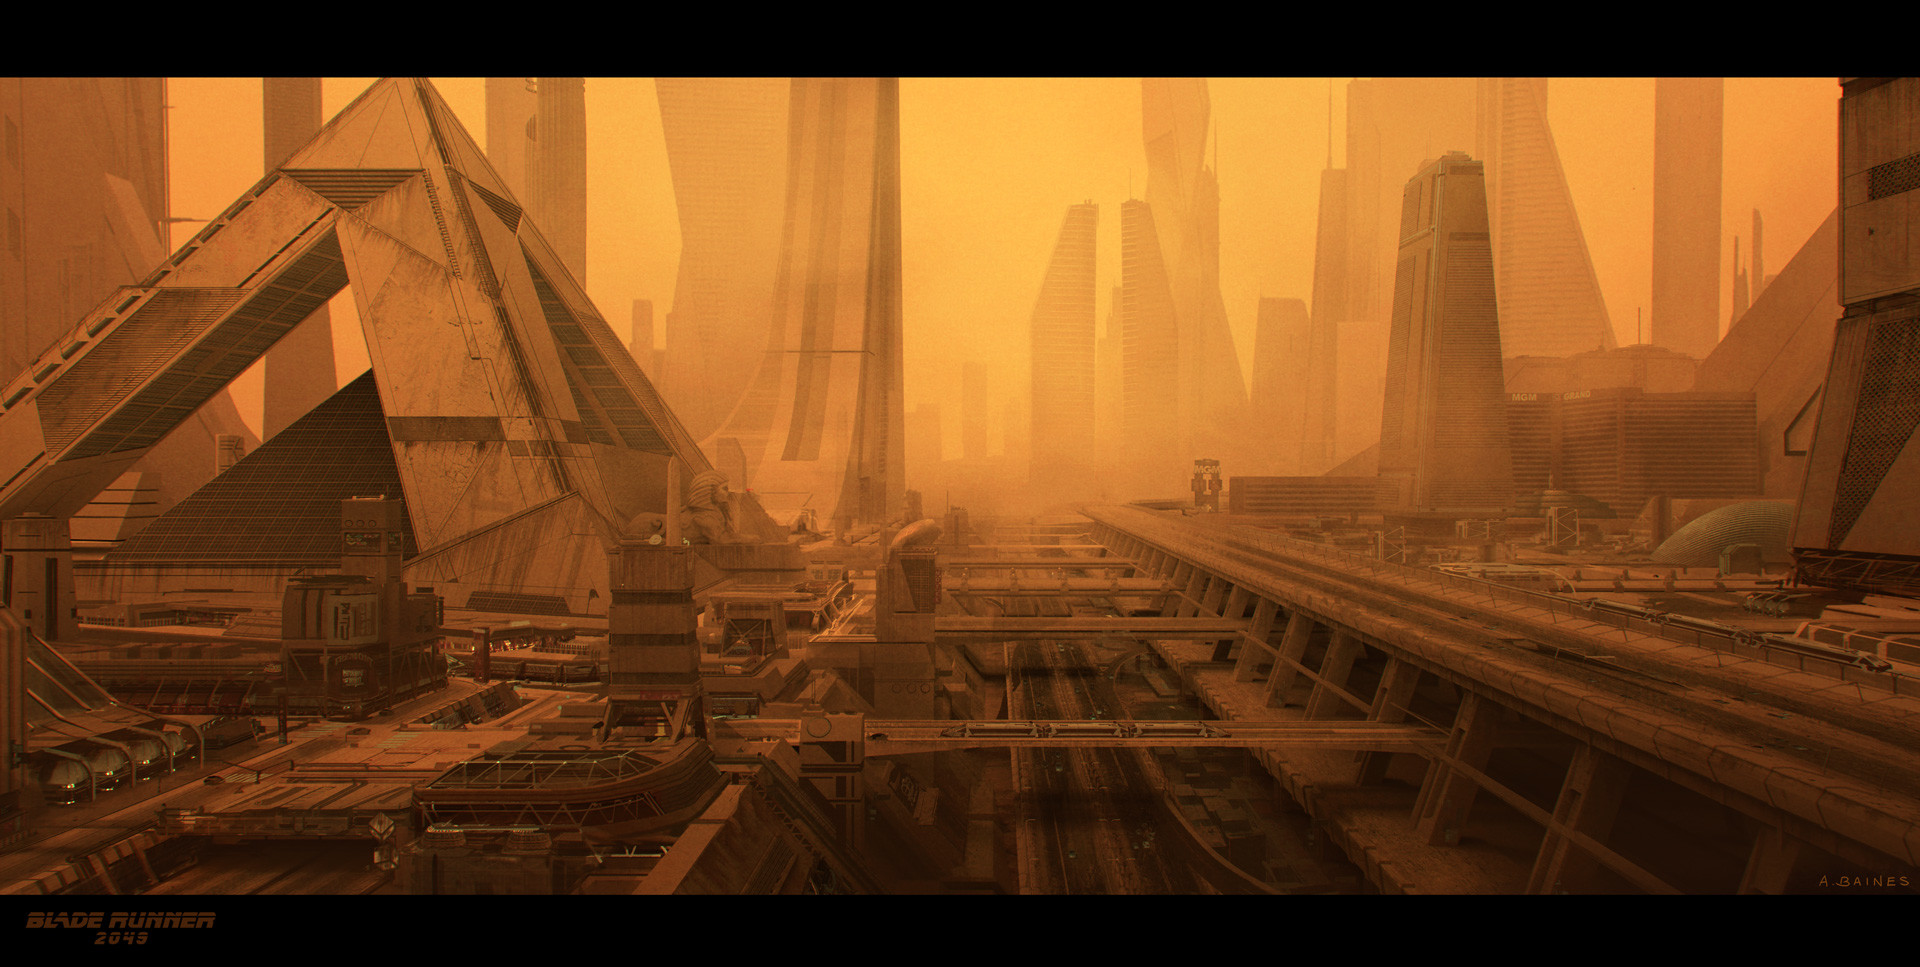 Blade Runner Blade Runner 2049 Movies Artwork Pyramid Futuristic Futuristic City Sphinx Industrial 1920x967